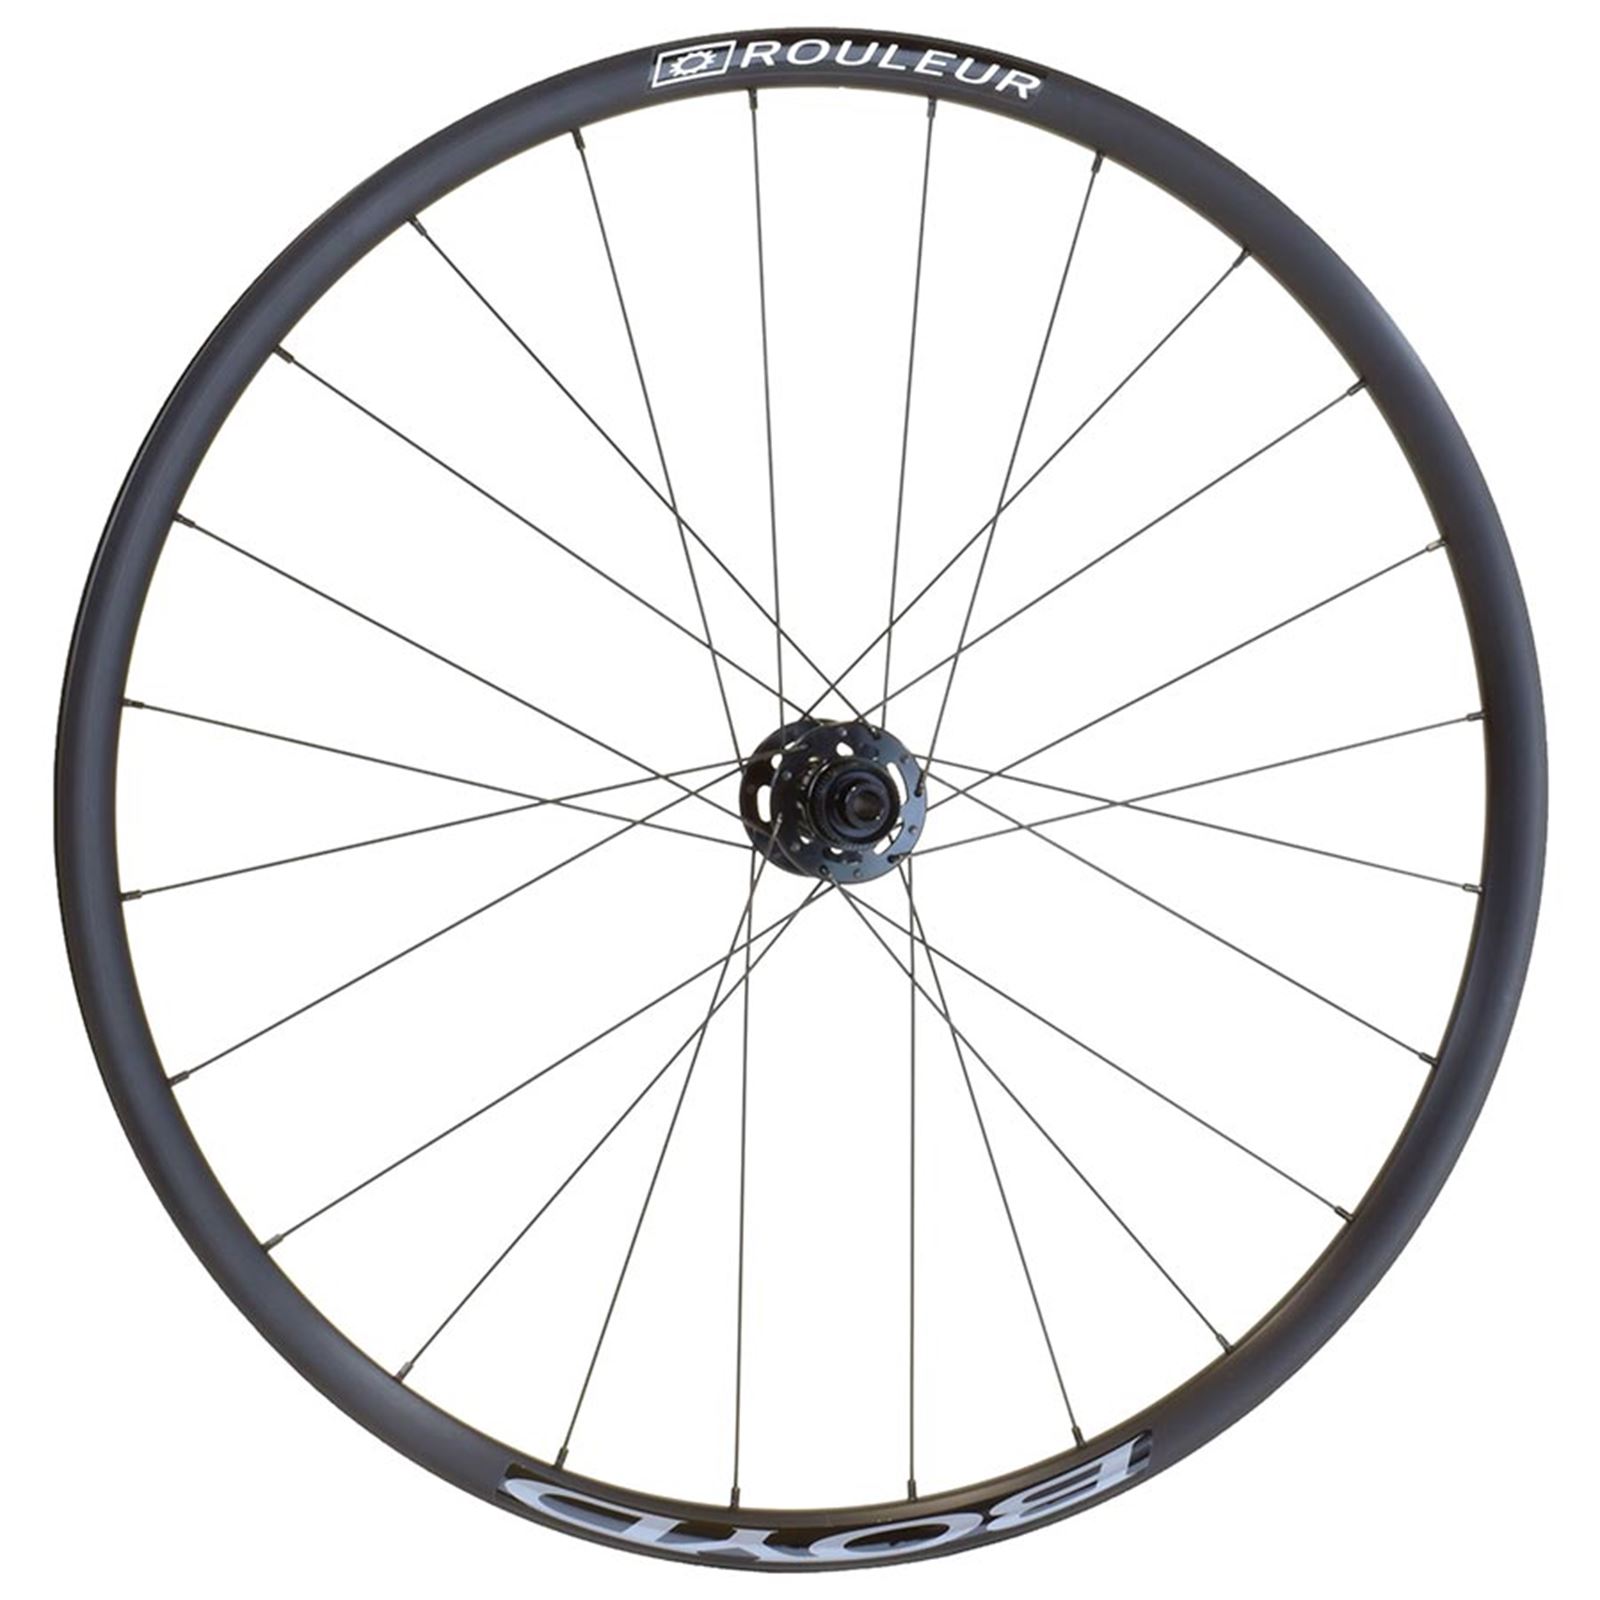 Boyd Cycling Prologue Rouleur Disc Front Wheel 700C/622 Holes: 24 - 12mm TA